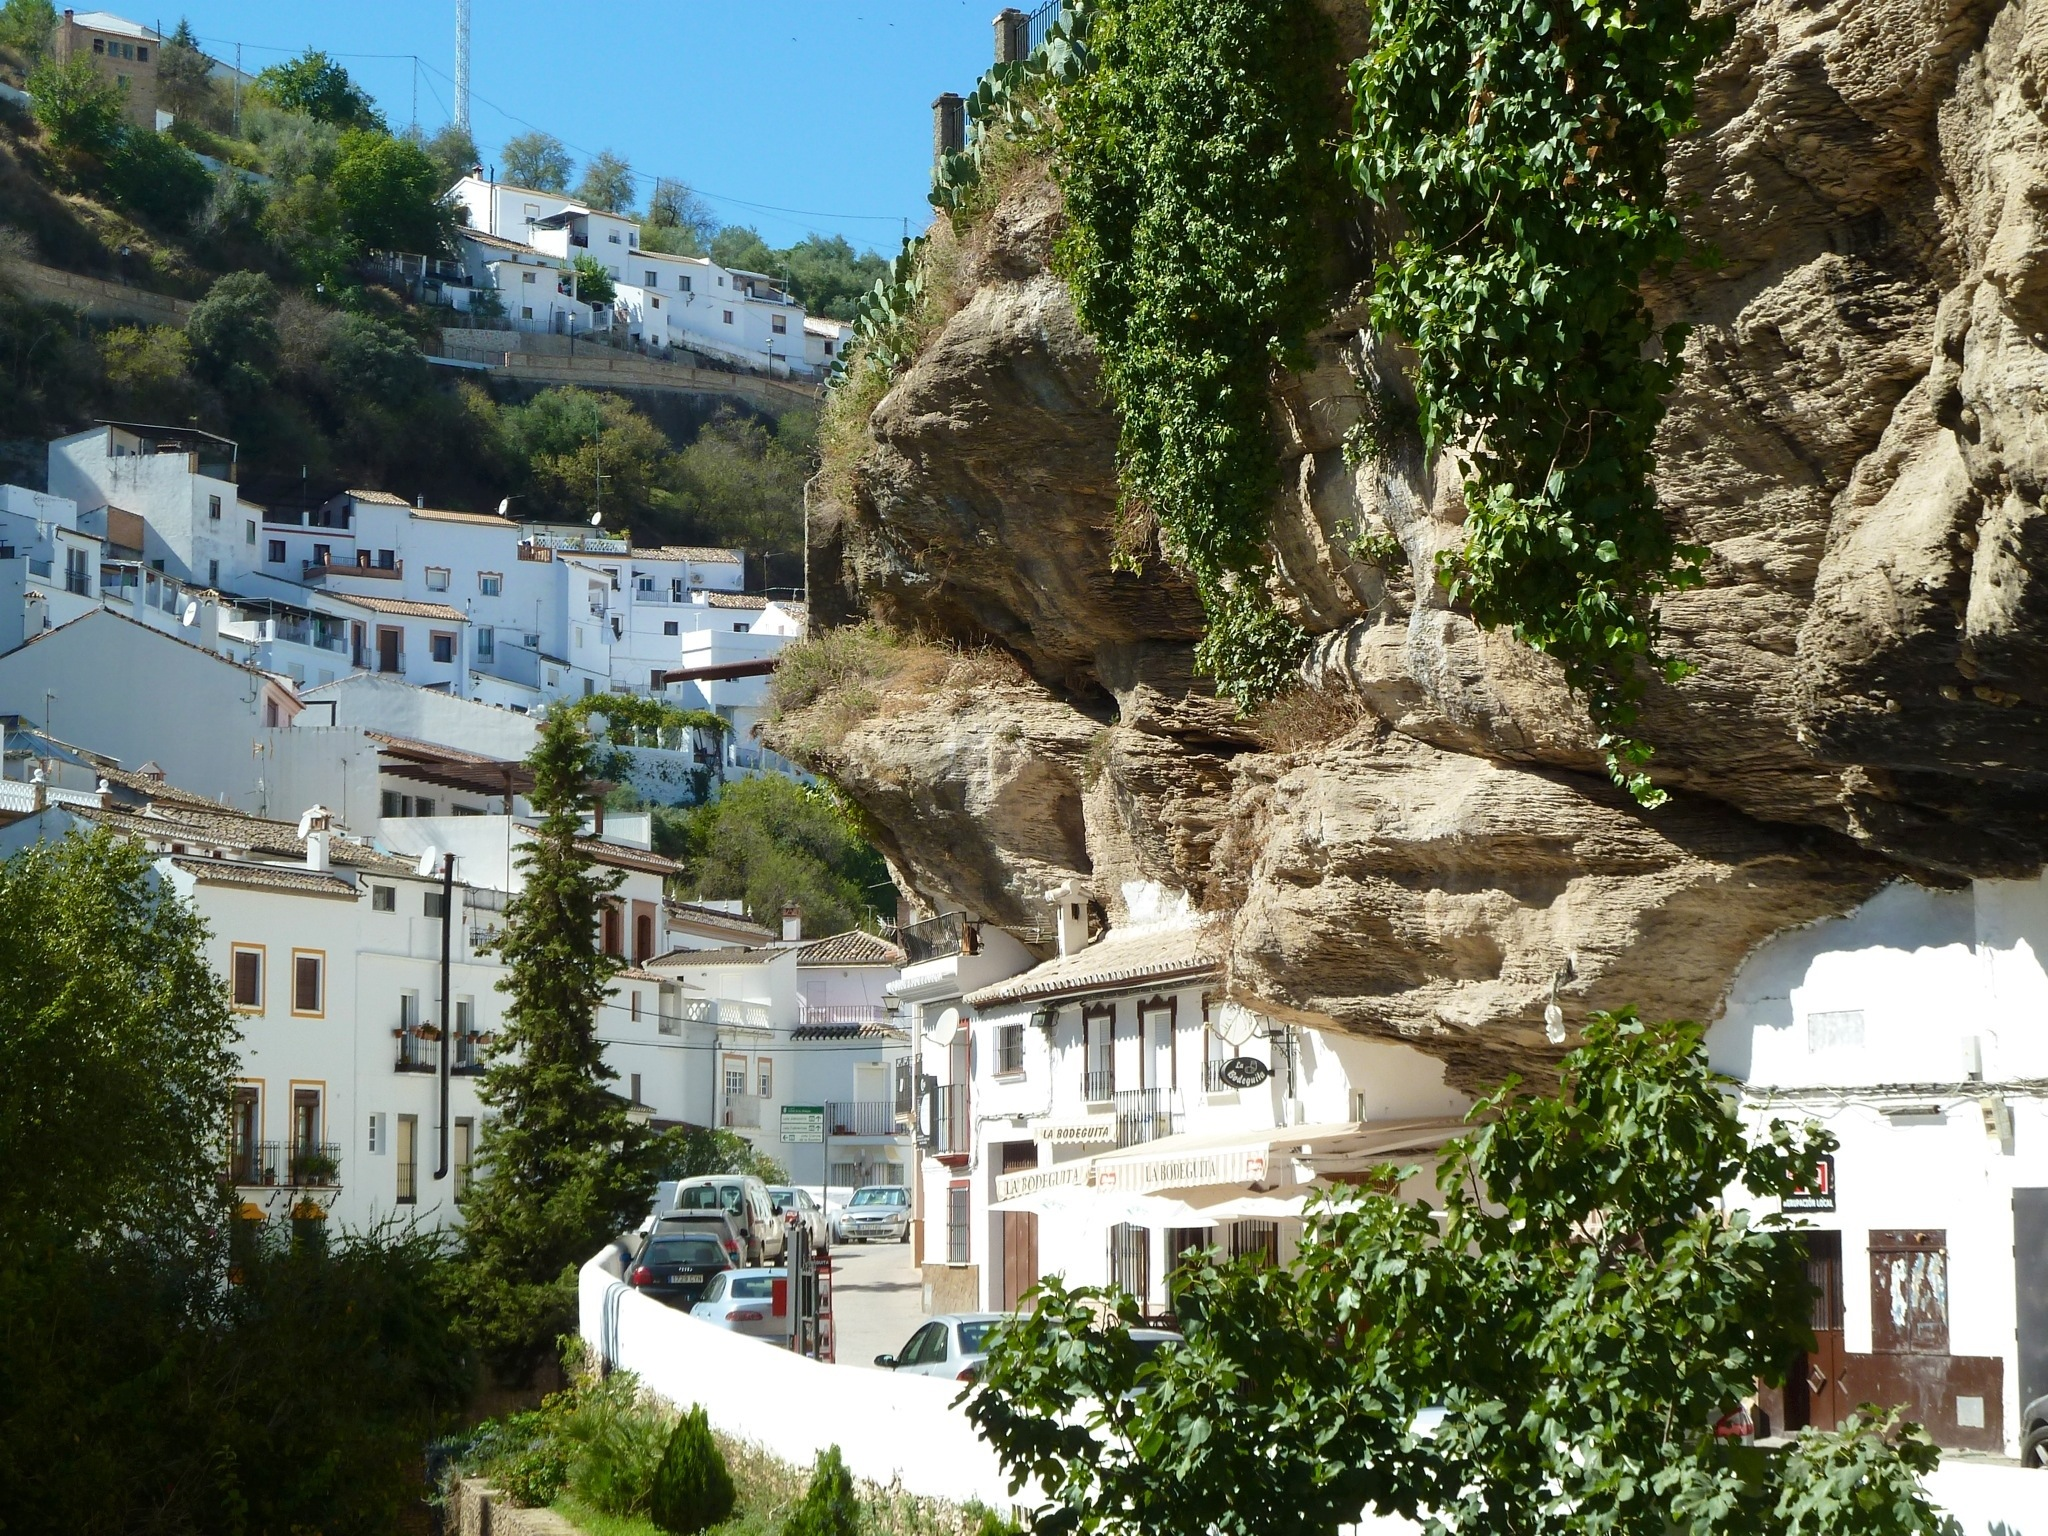 Setenil de las Bodegas in Cadiz, Spain. - Tourism, Town, The rocks, The photo, Longpost